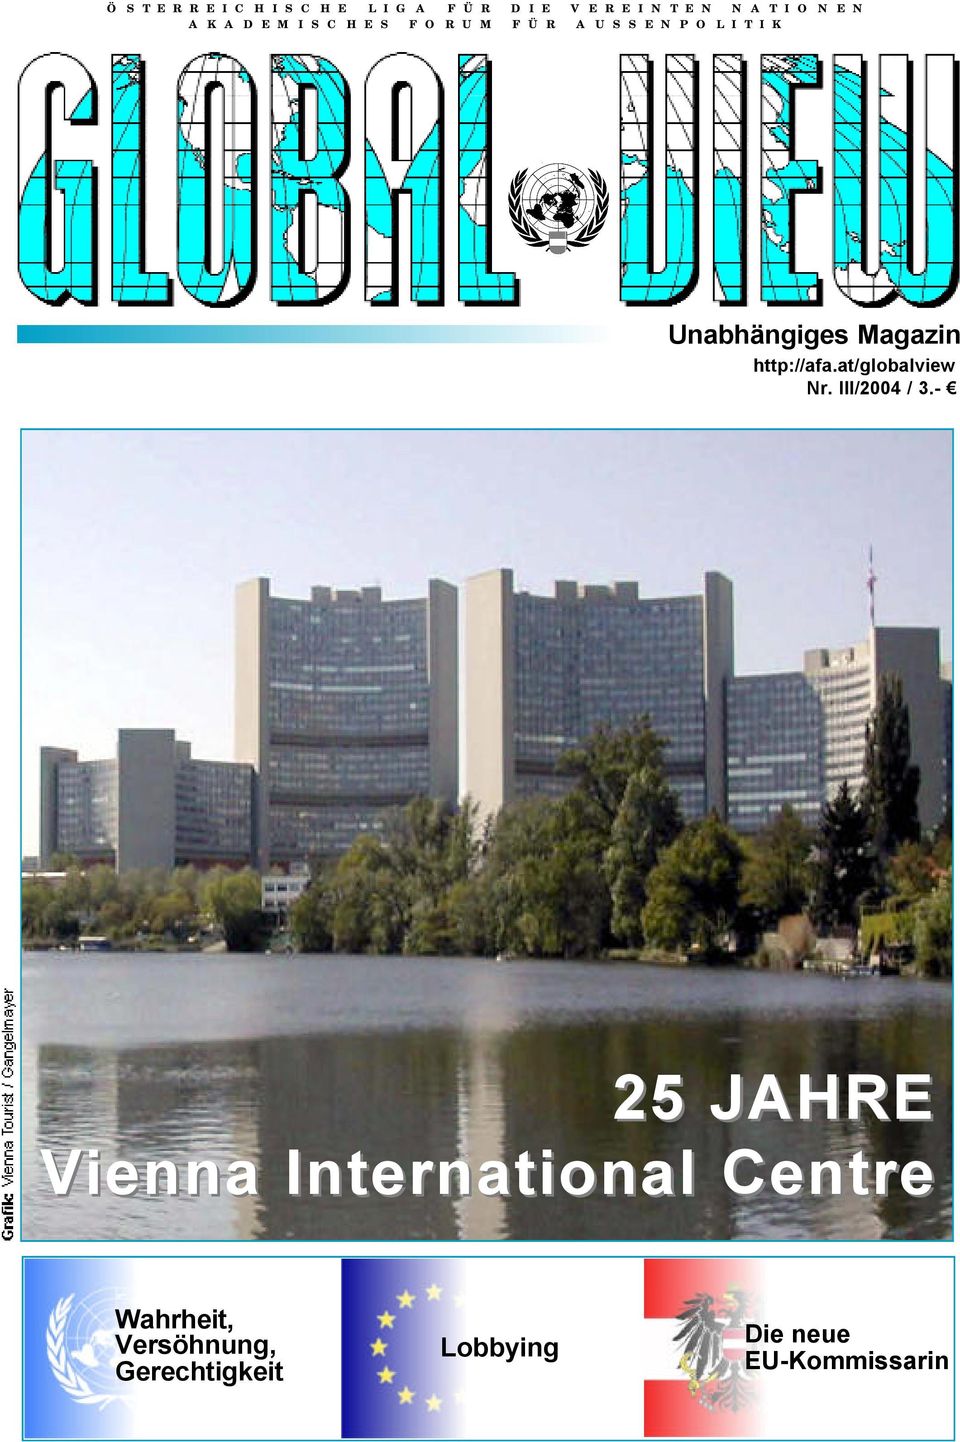 Unabhängiges Magazin http://afa.at/globalview Nr. III/2004 / 3.